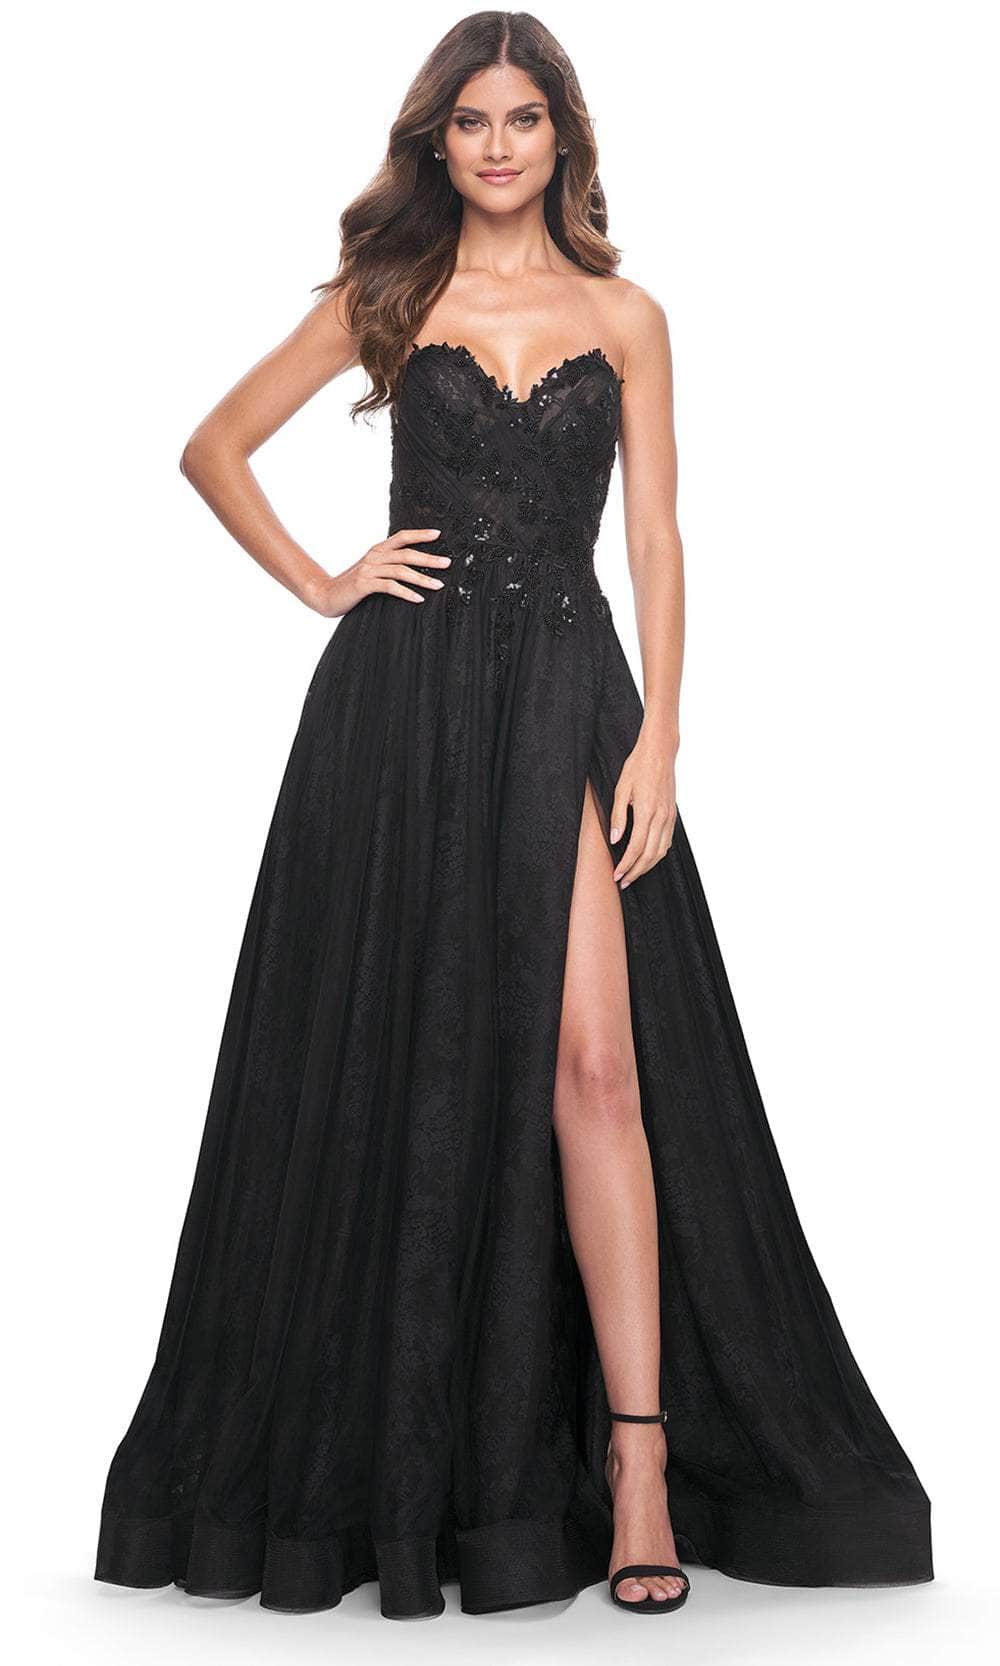 La Femme 31954 - Sweetheart Floral Lace Prom Dress Prom Dresses 00 / Black